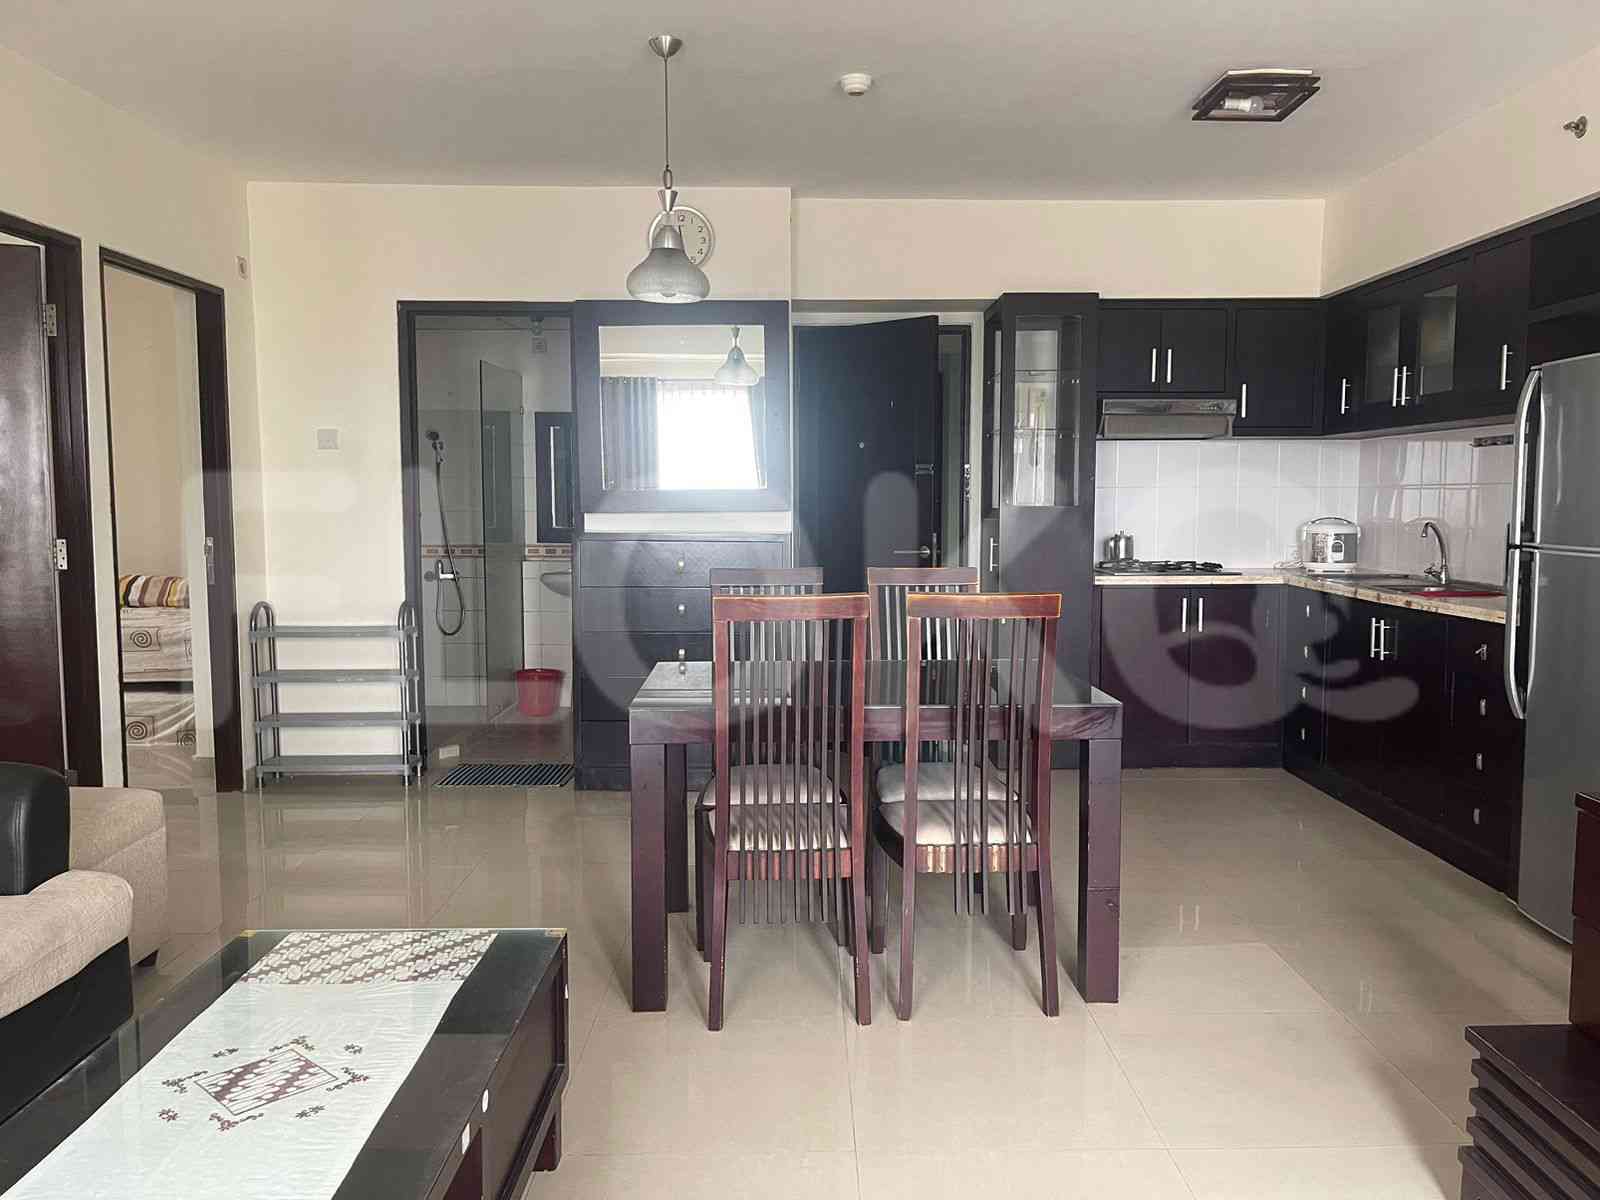 64 sqm, 21st floor, 2 BR apartment for sale in Kuningan 9